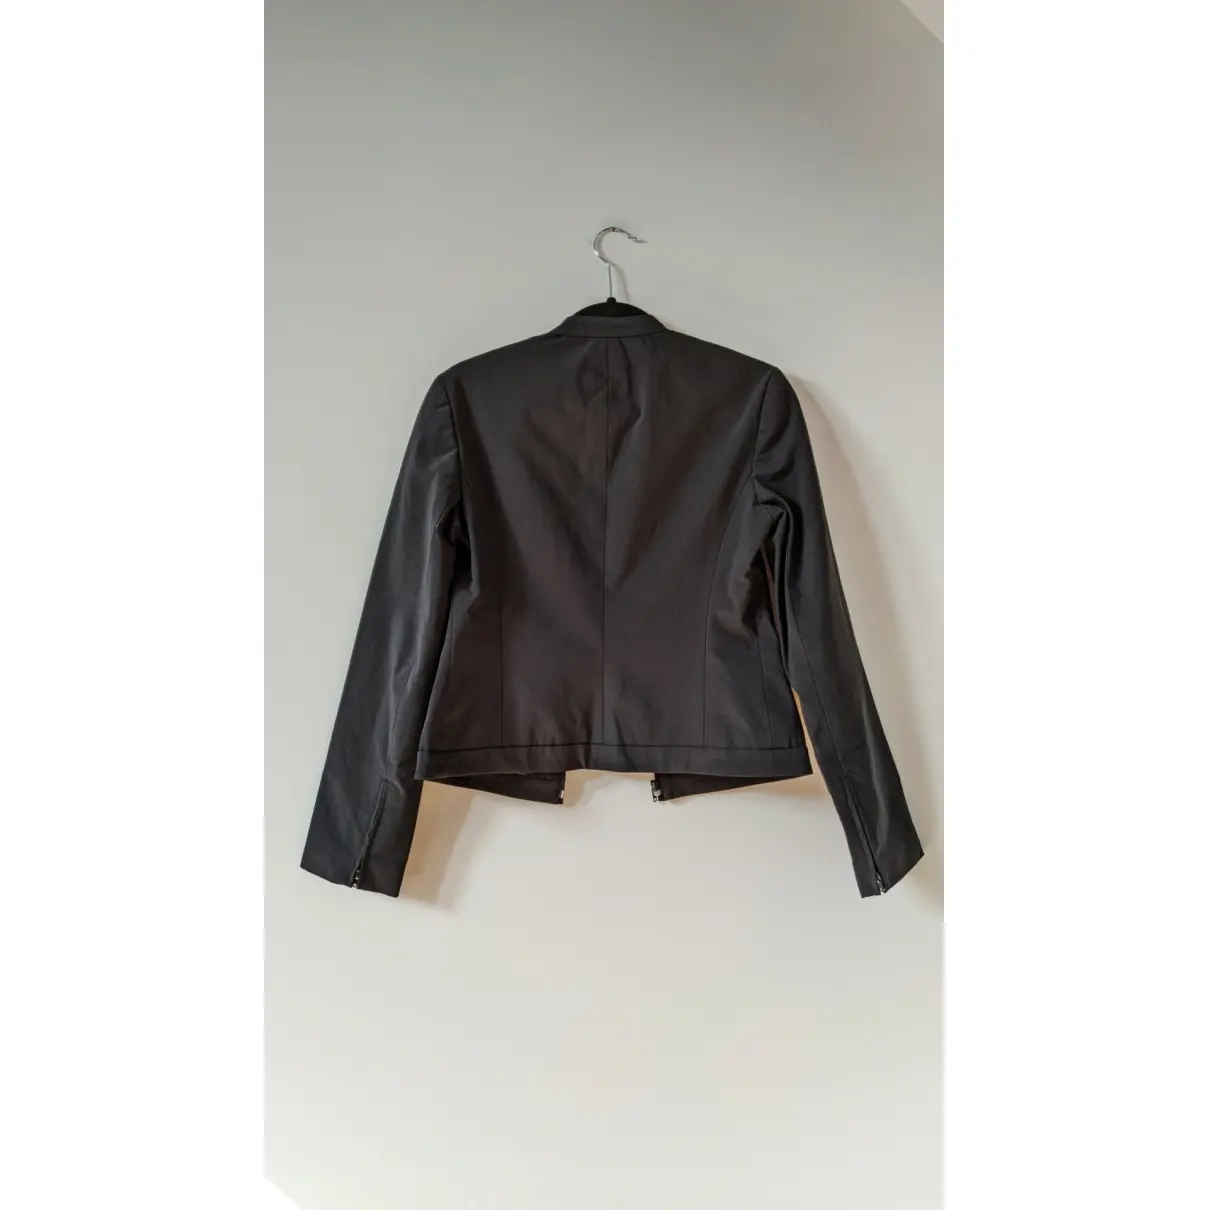 Buy Bcbg Max Azria Jacket online